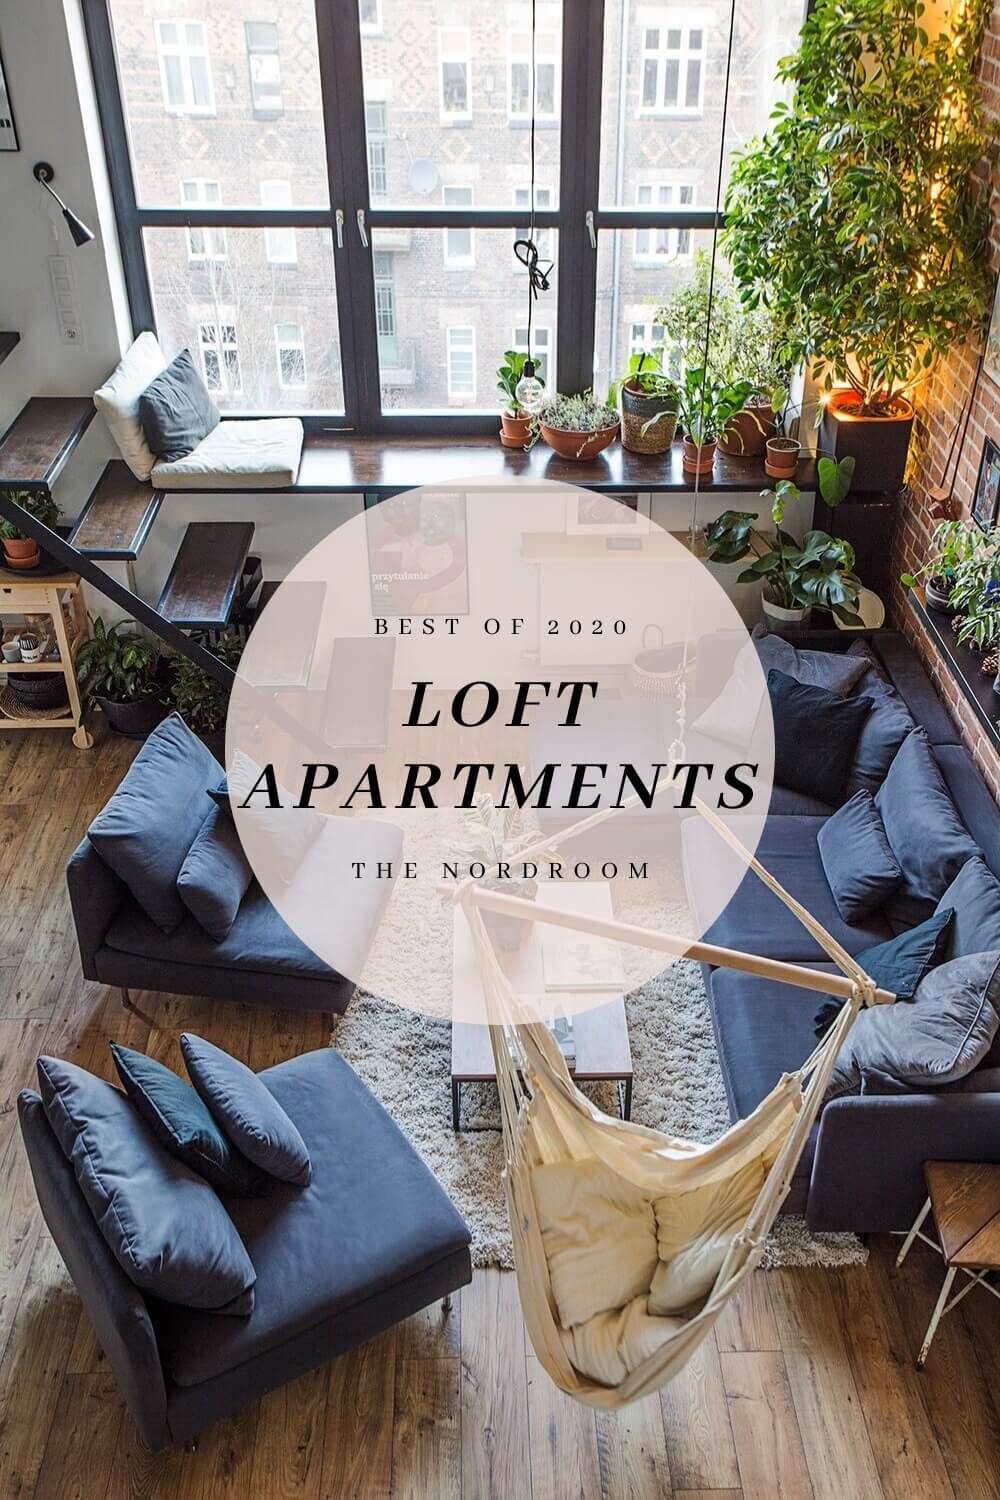 Best of 2020: Loft Apartments